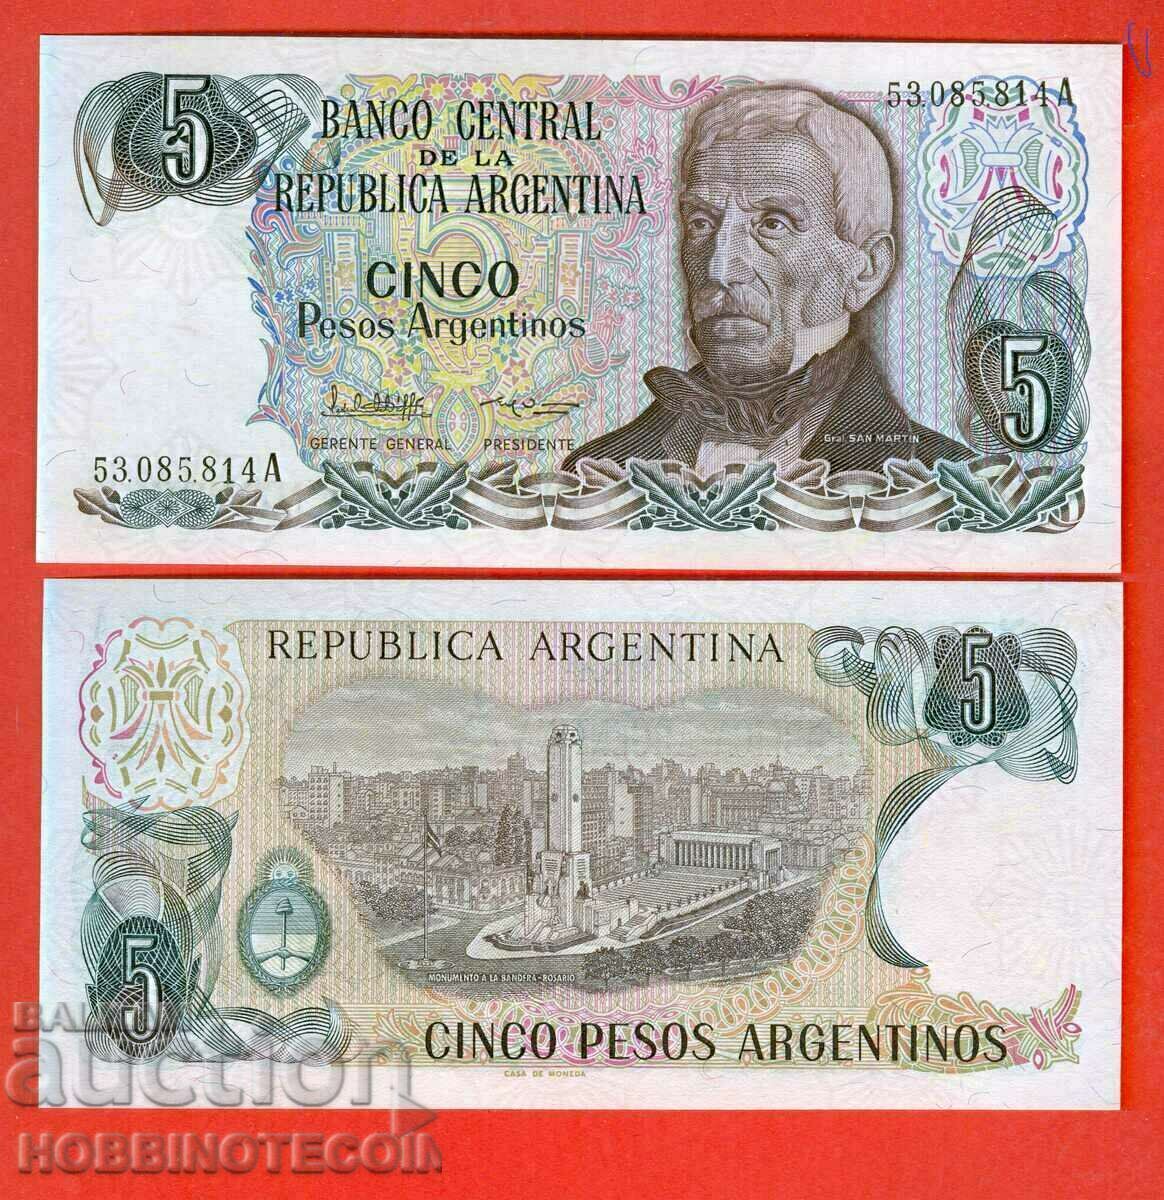 АРЖЕНТИНА ARGENTINA 5 Песо емисия - issue 1985 НОВА UNC